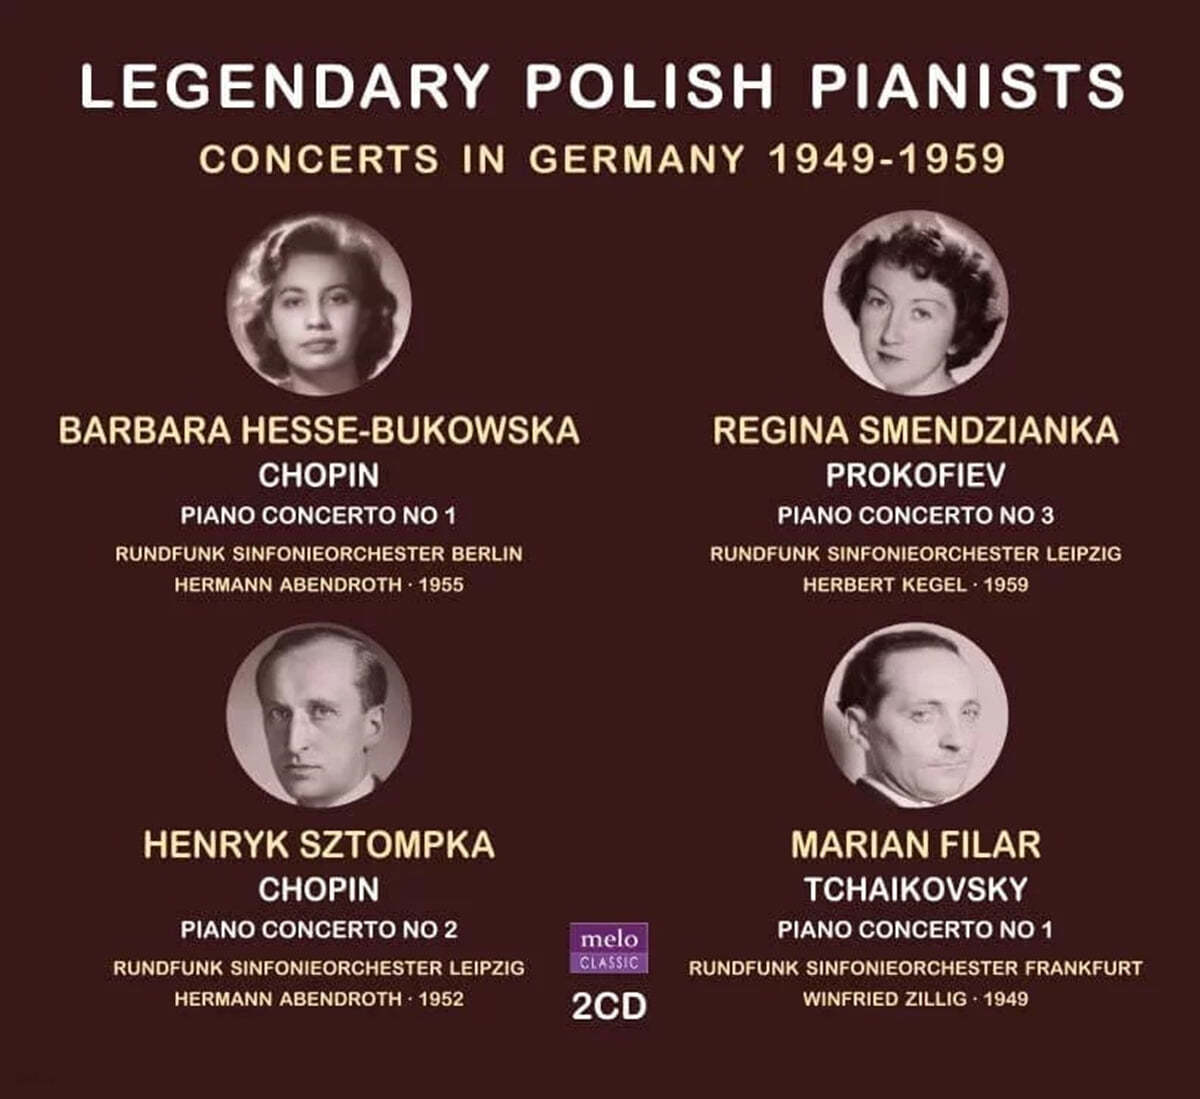 Barbara Hesse-Bukowska / Henryk Sztompka / Regina Smendzianka / Marian Filar 전설적인 폴란드 피아니스트들 (Legendary Polish Pianists - Concerts in Germany 1949-1959)